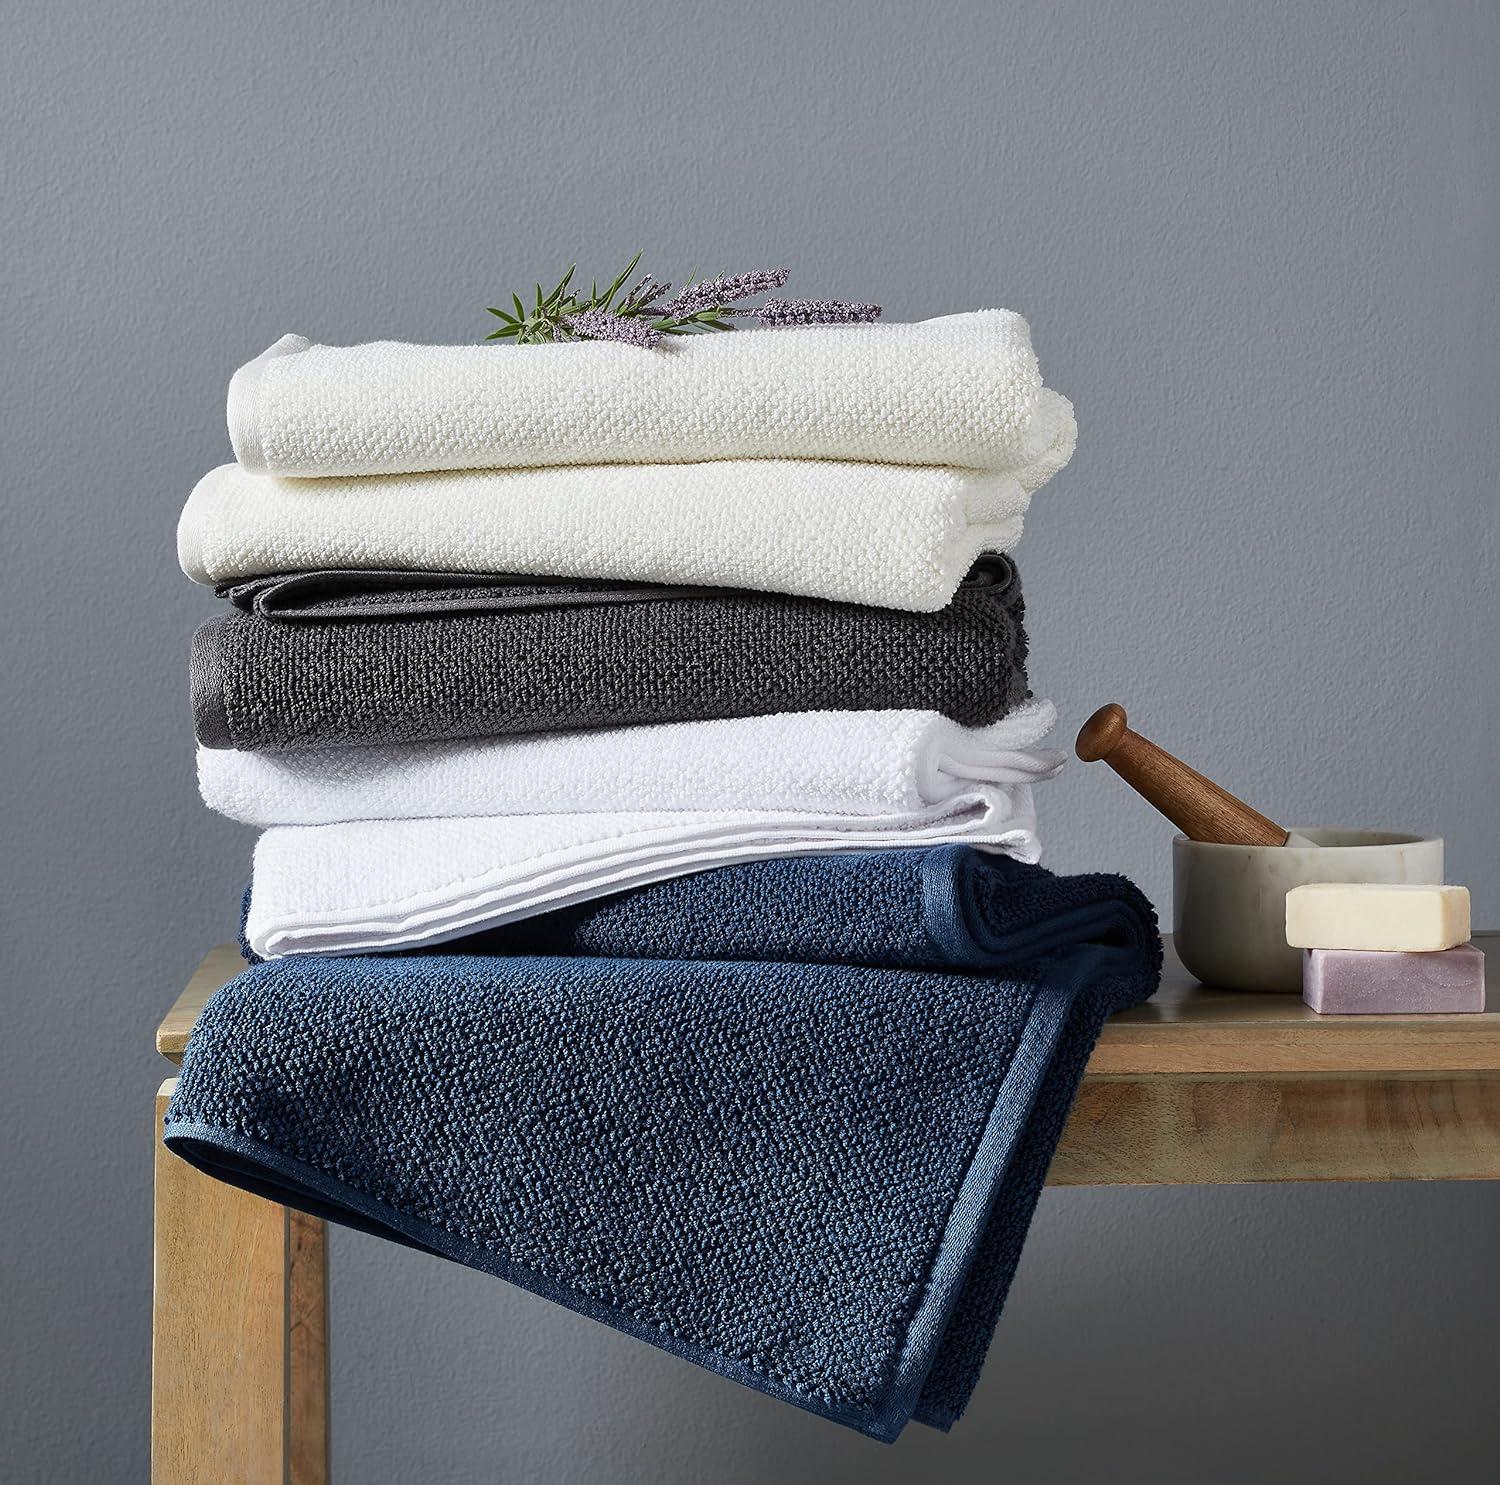 American Soft Linen 6 Piece Towel Set: Wrap Yourself in Luxury